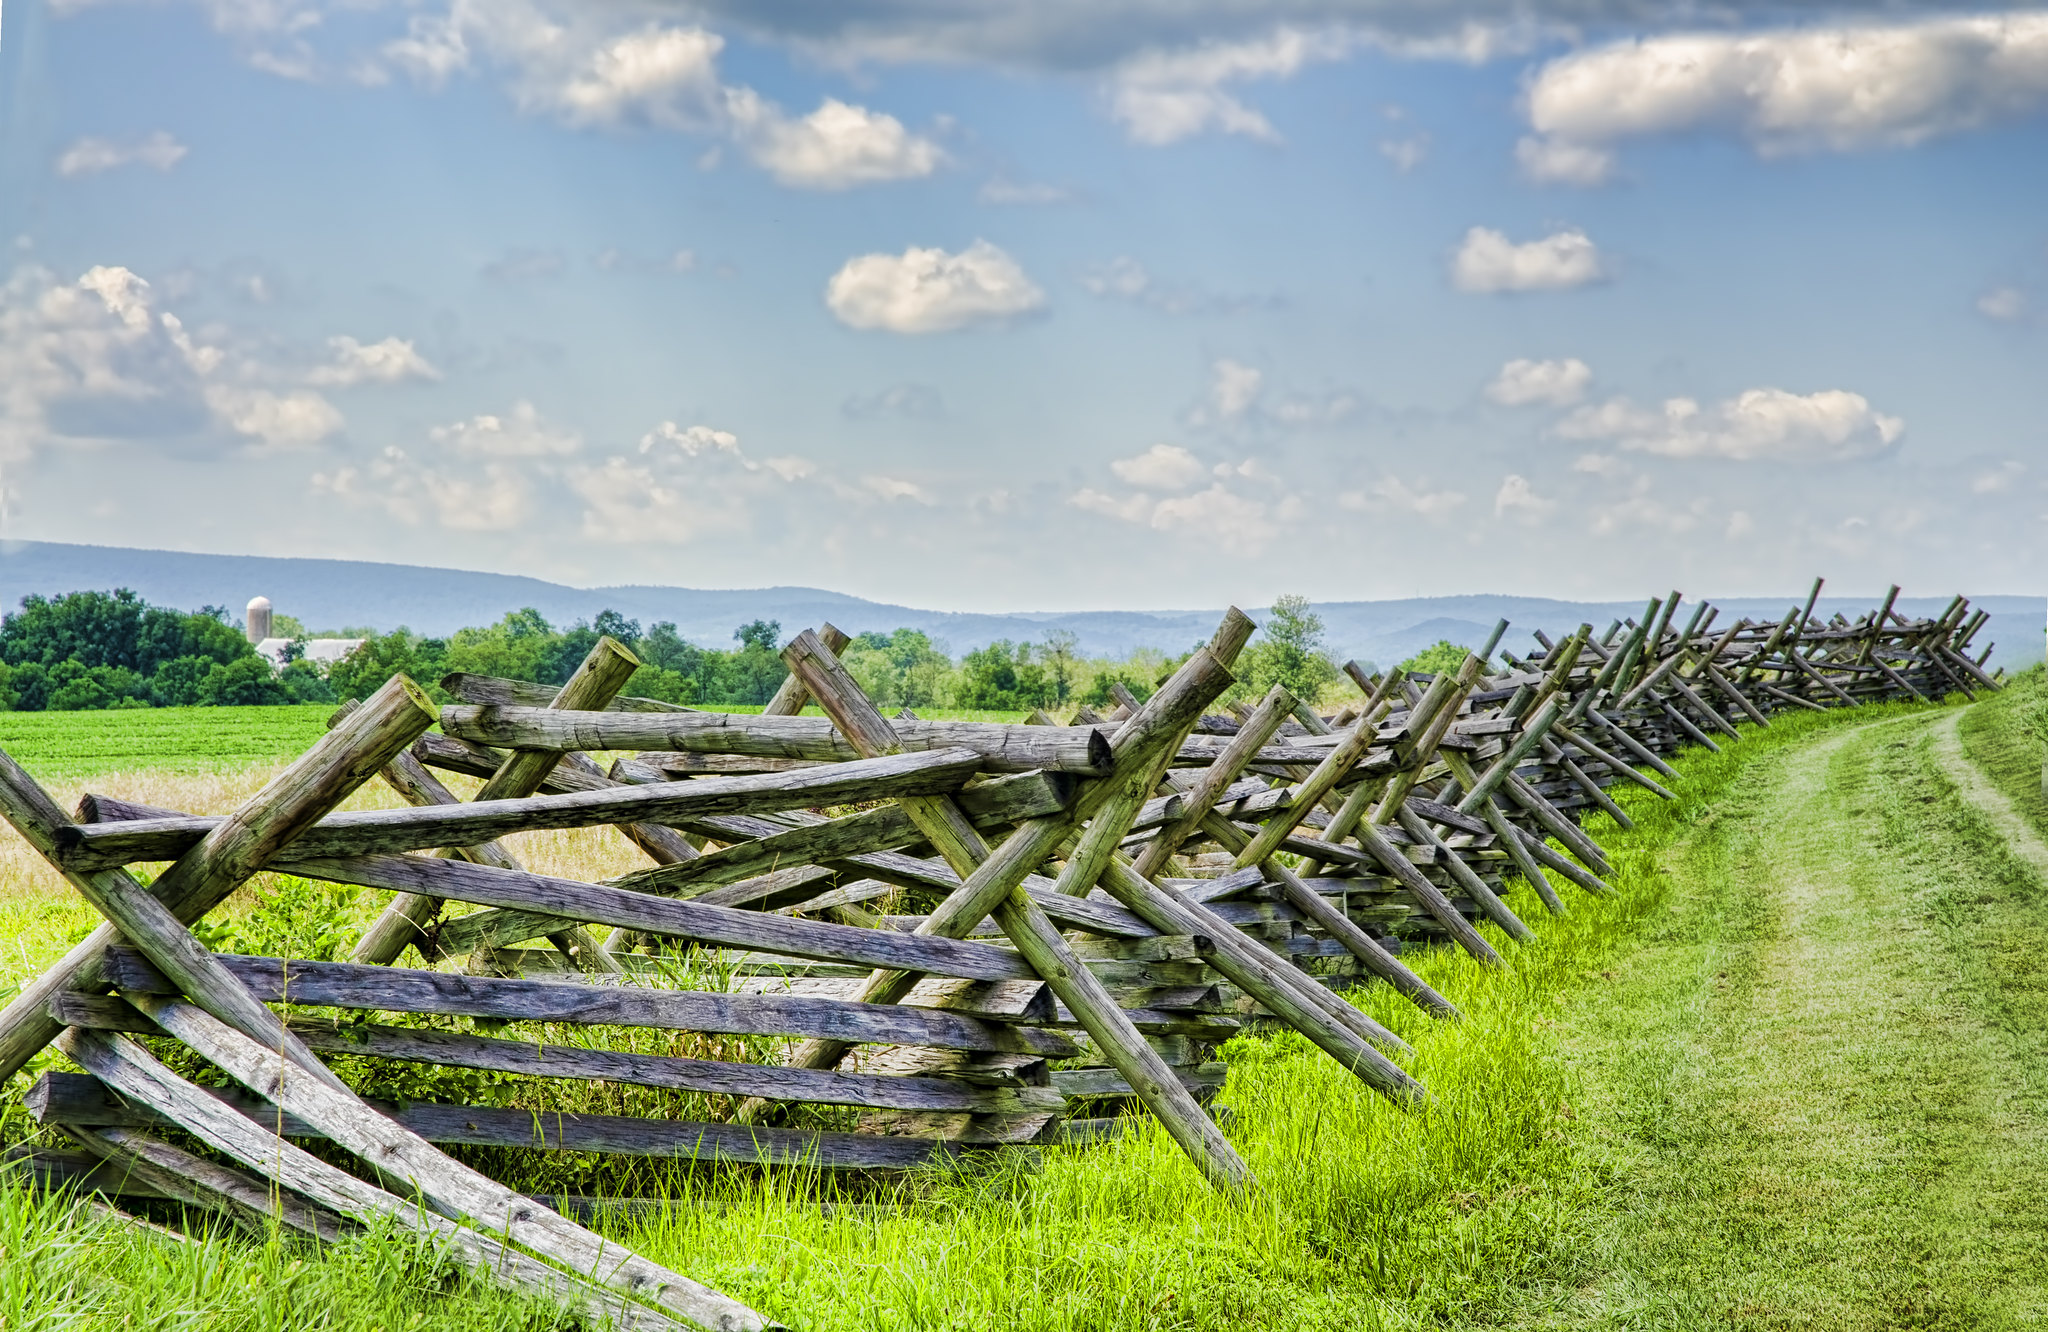 15 Things to do in Gettysburg, Pennsylvania